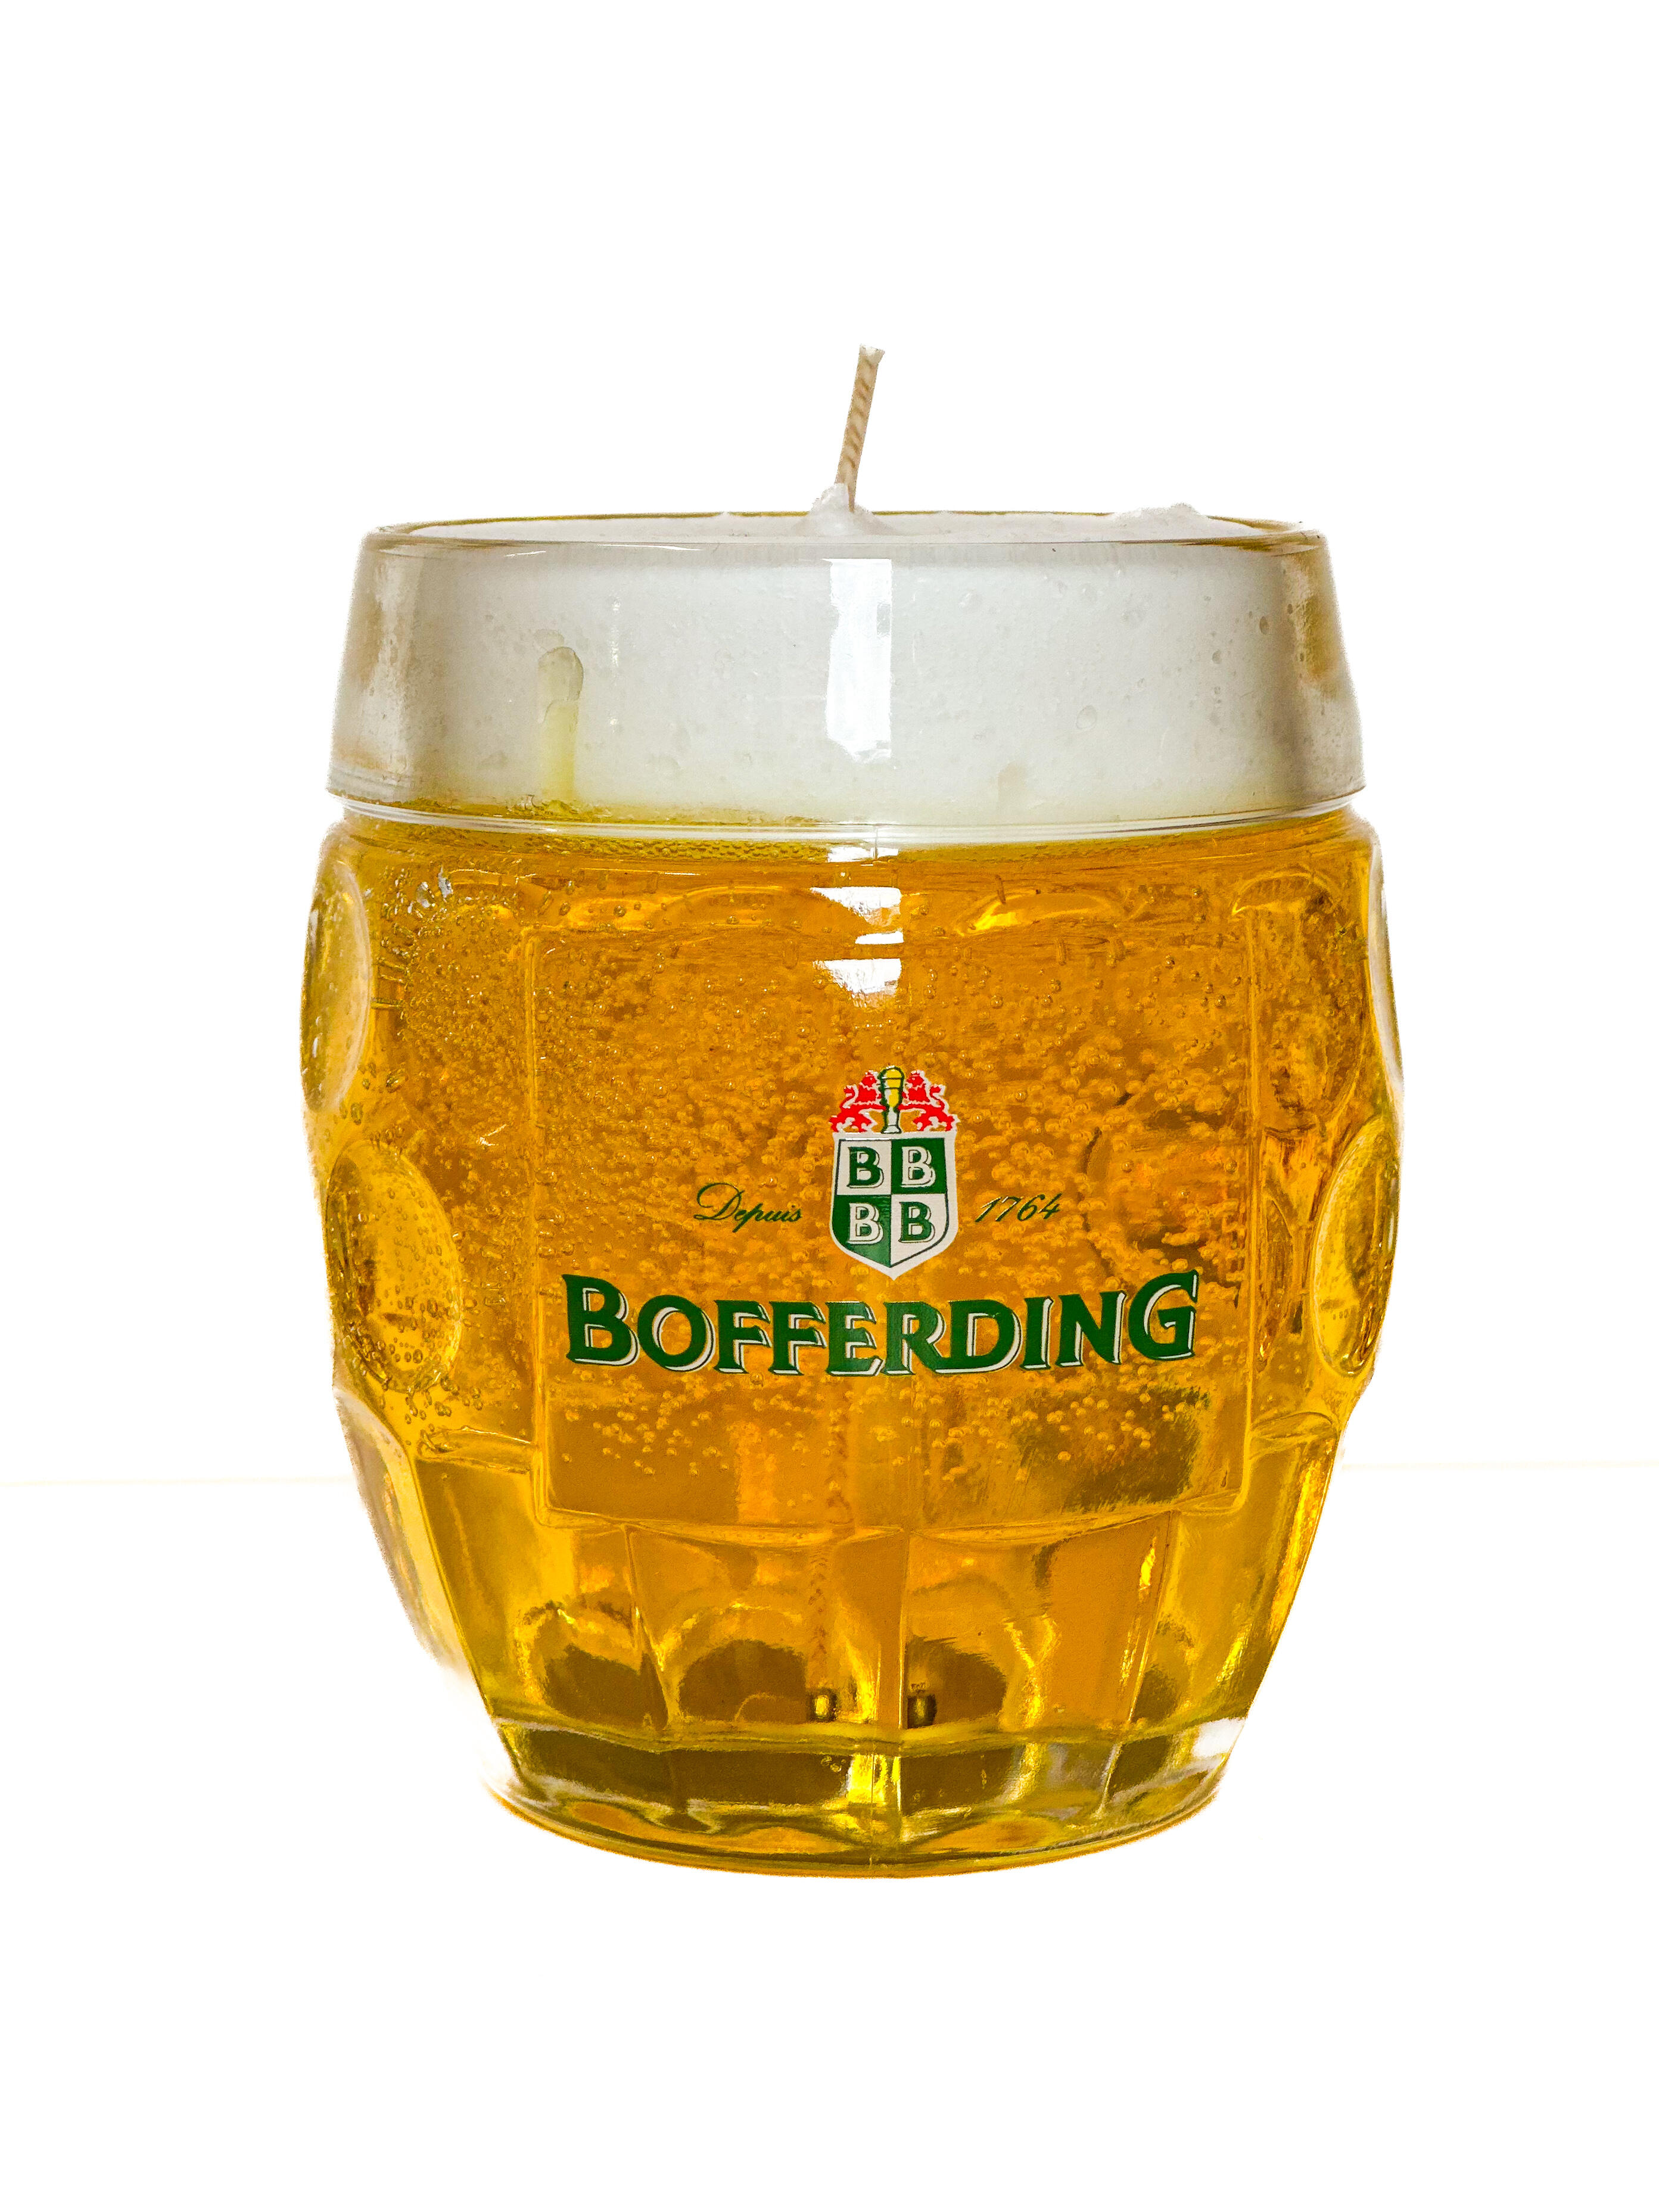 Bierkerze "Klensch" - Bofferding